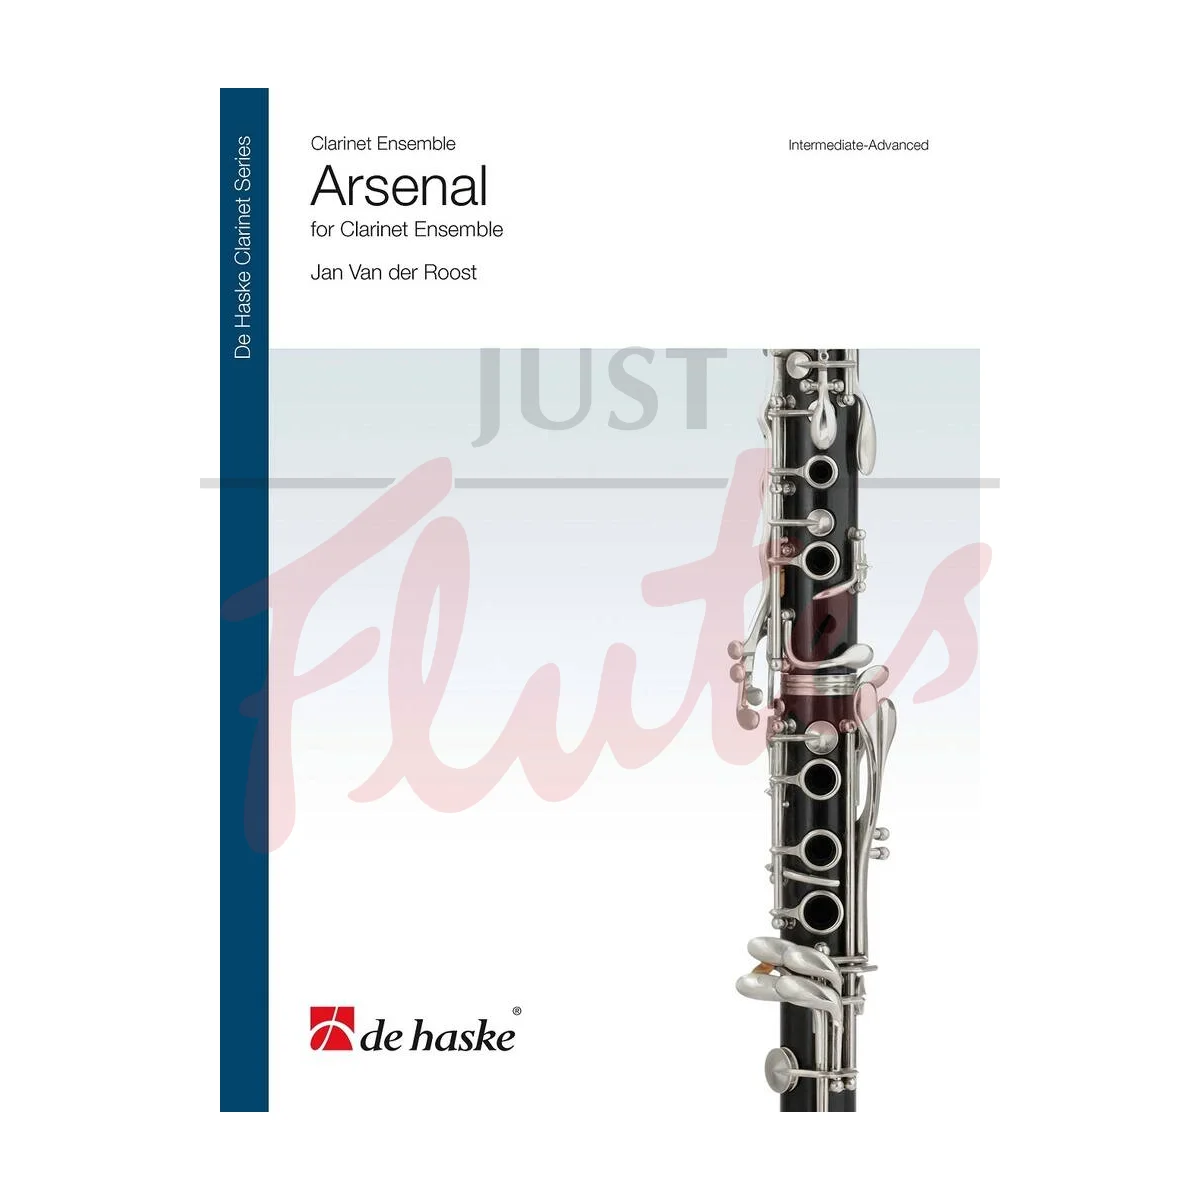 Arsenal for Clarinet Ensemble